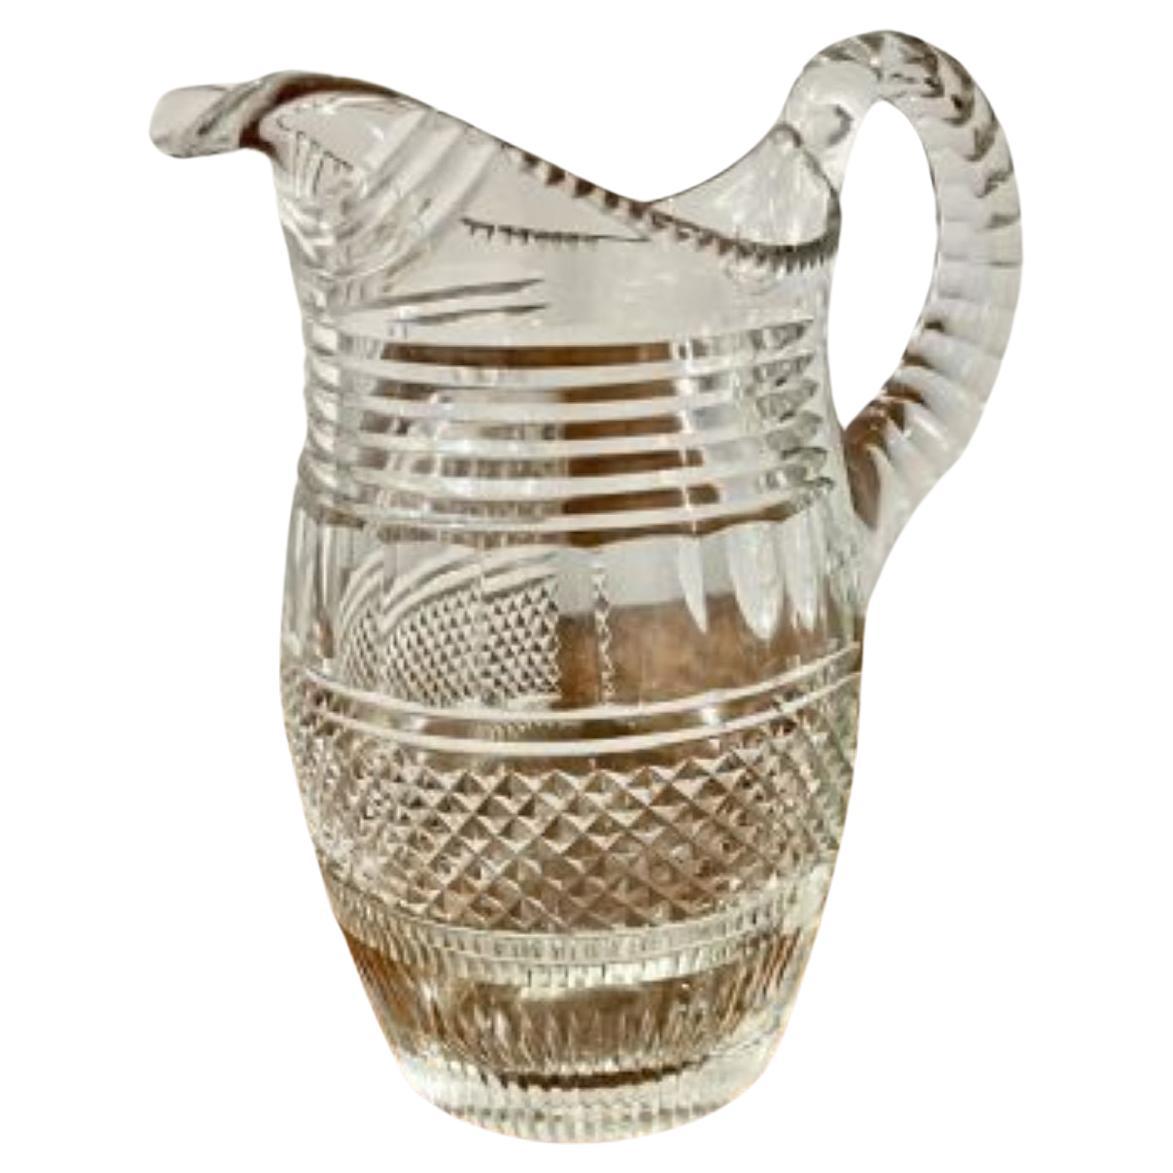 Superb quality antique Victorian cut glass water jug